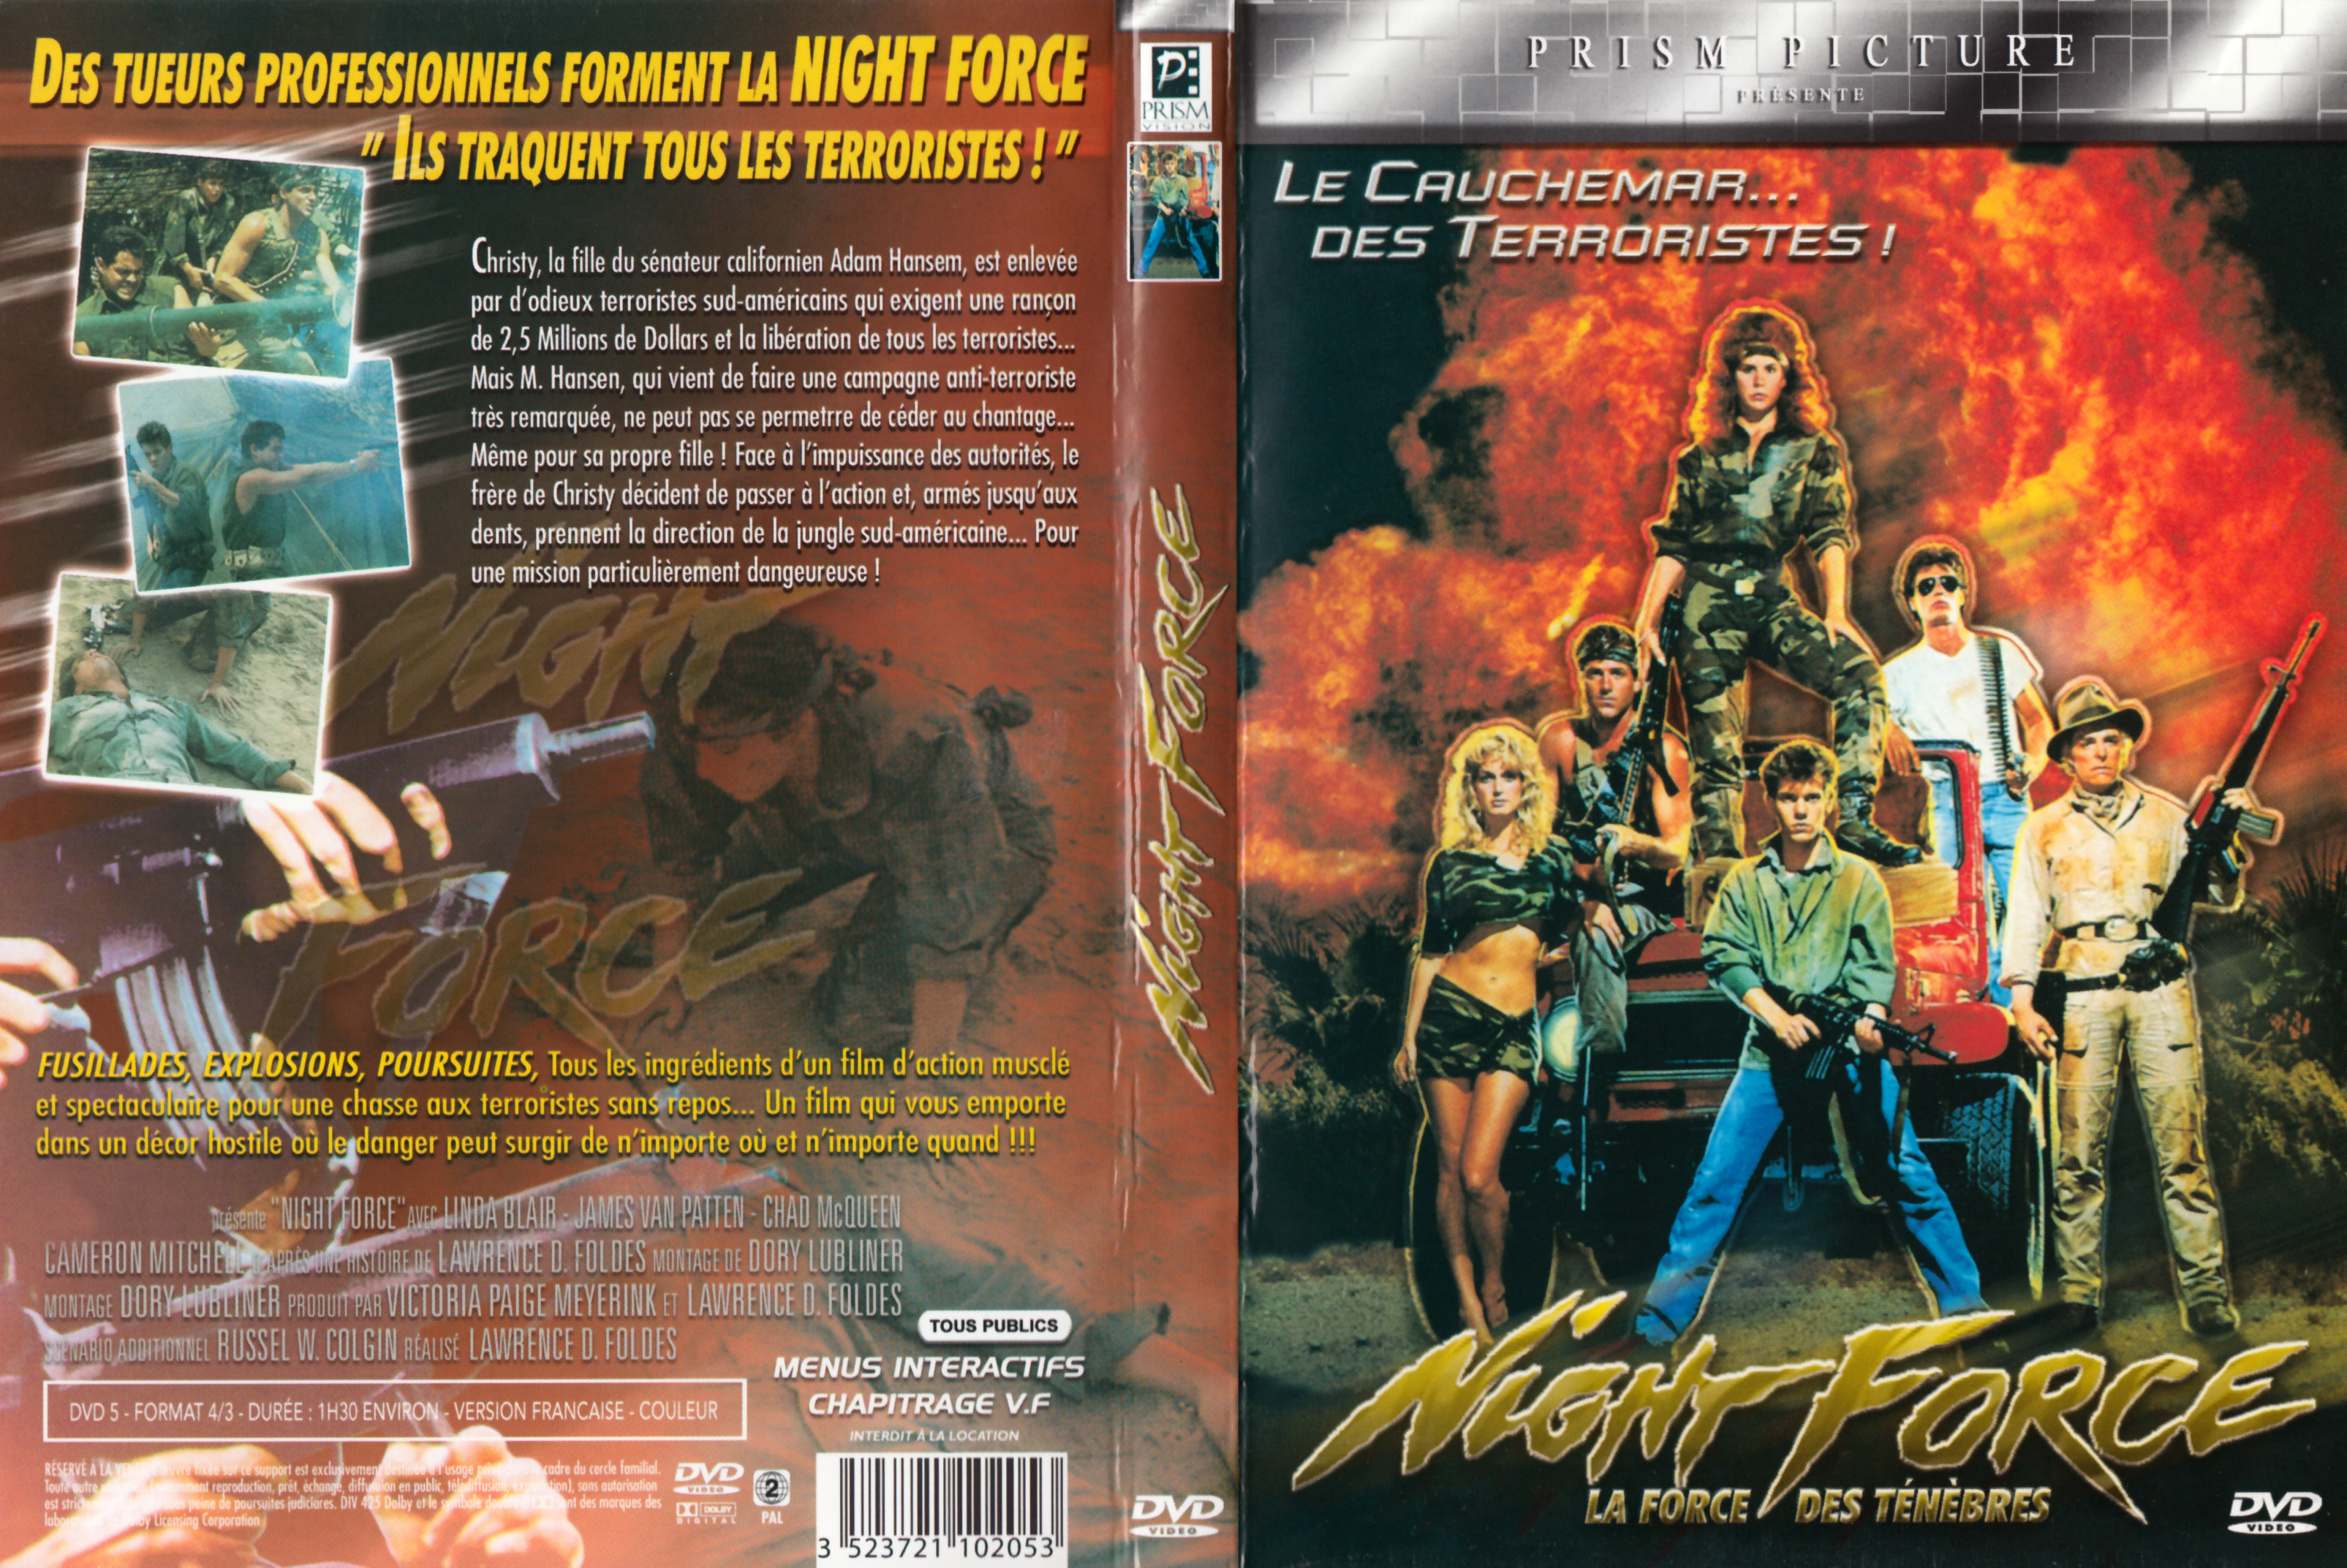 Jaquette DVD Night force v2